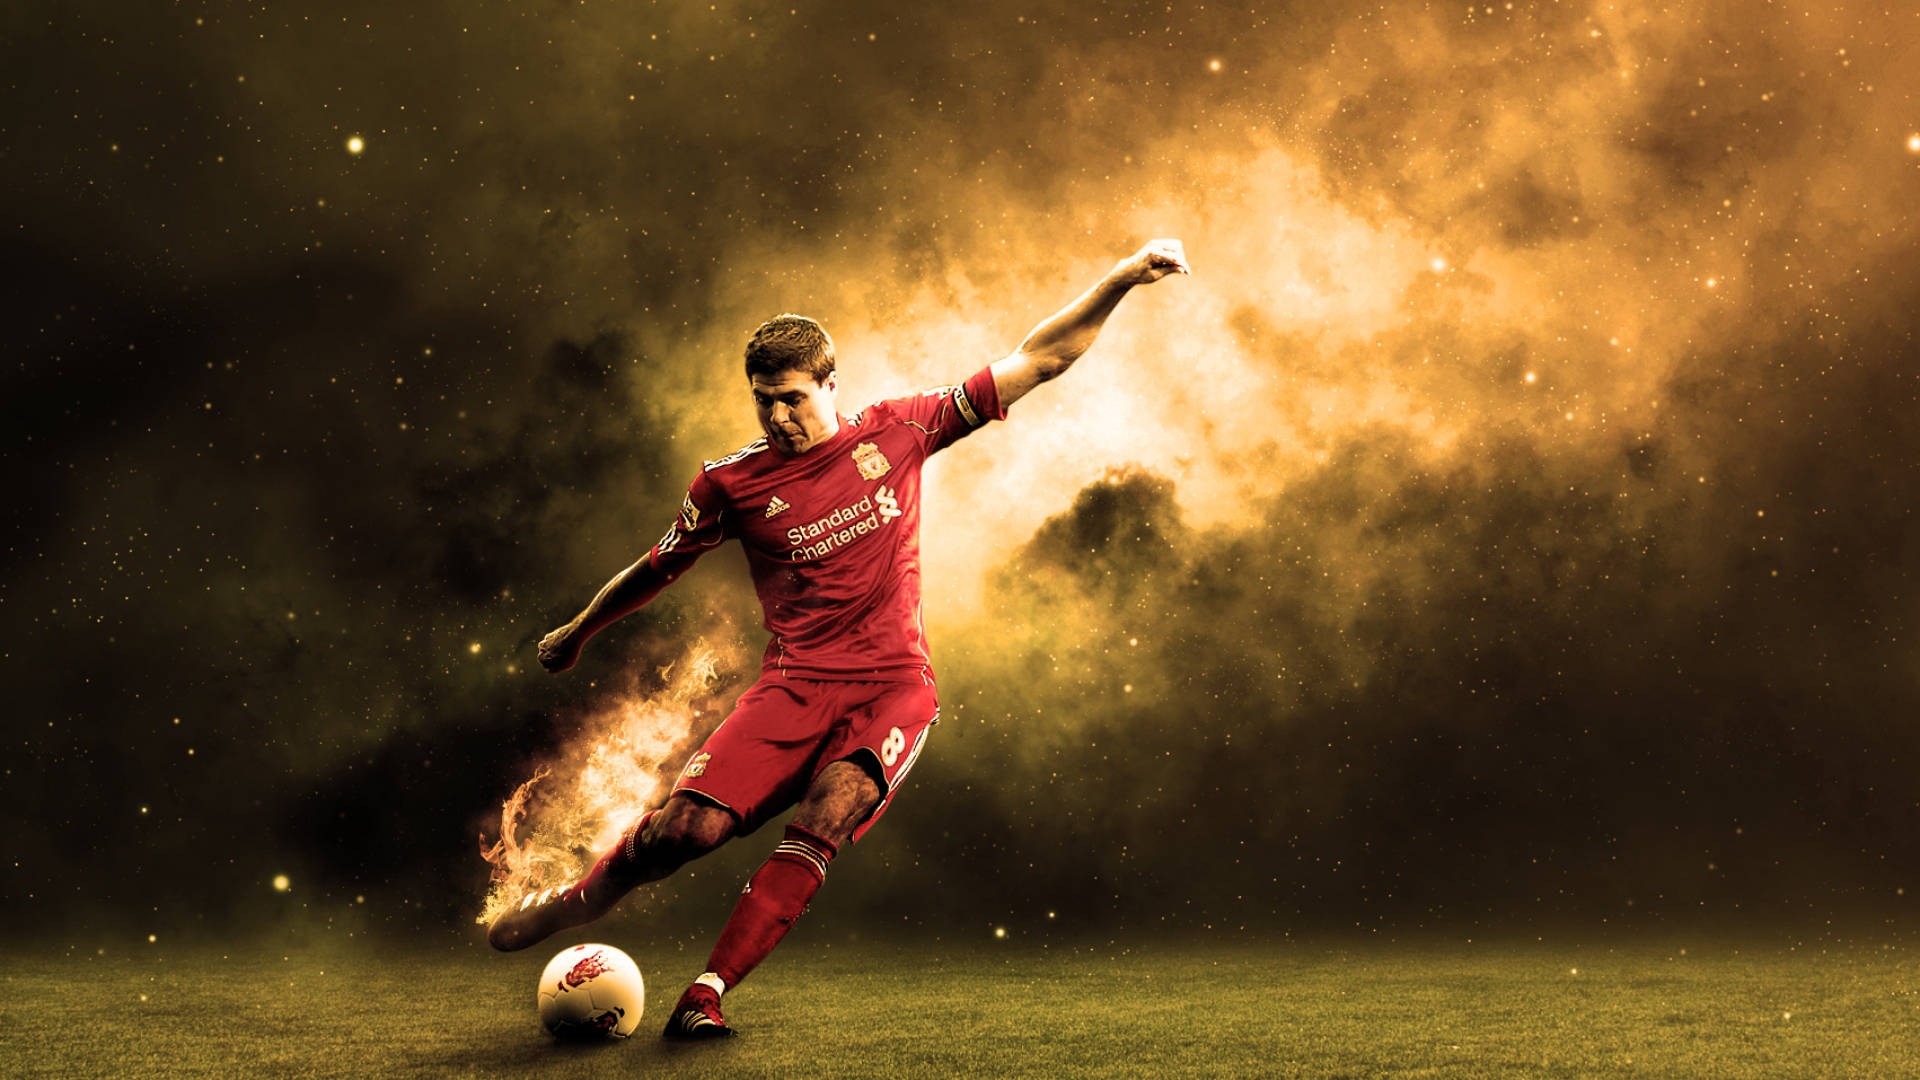 Steven Gerrard Mighty Kick Wallpaper